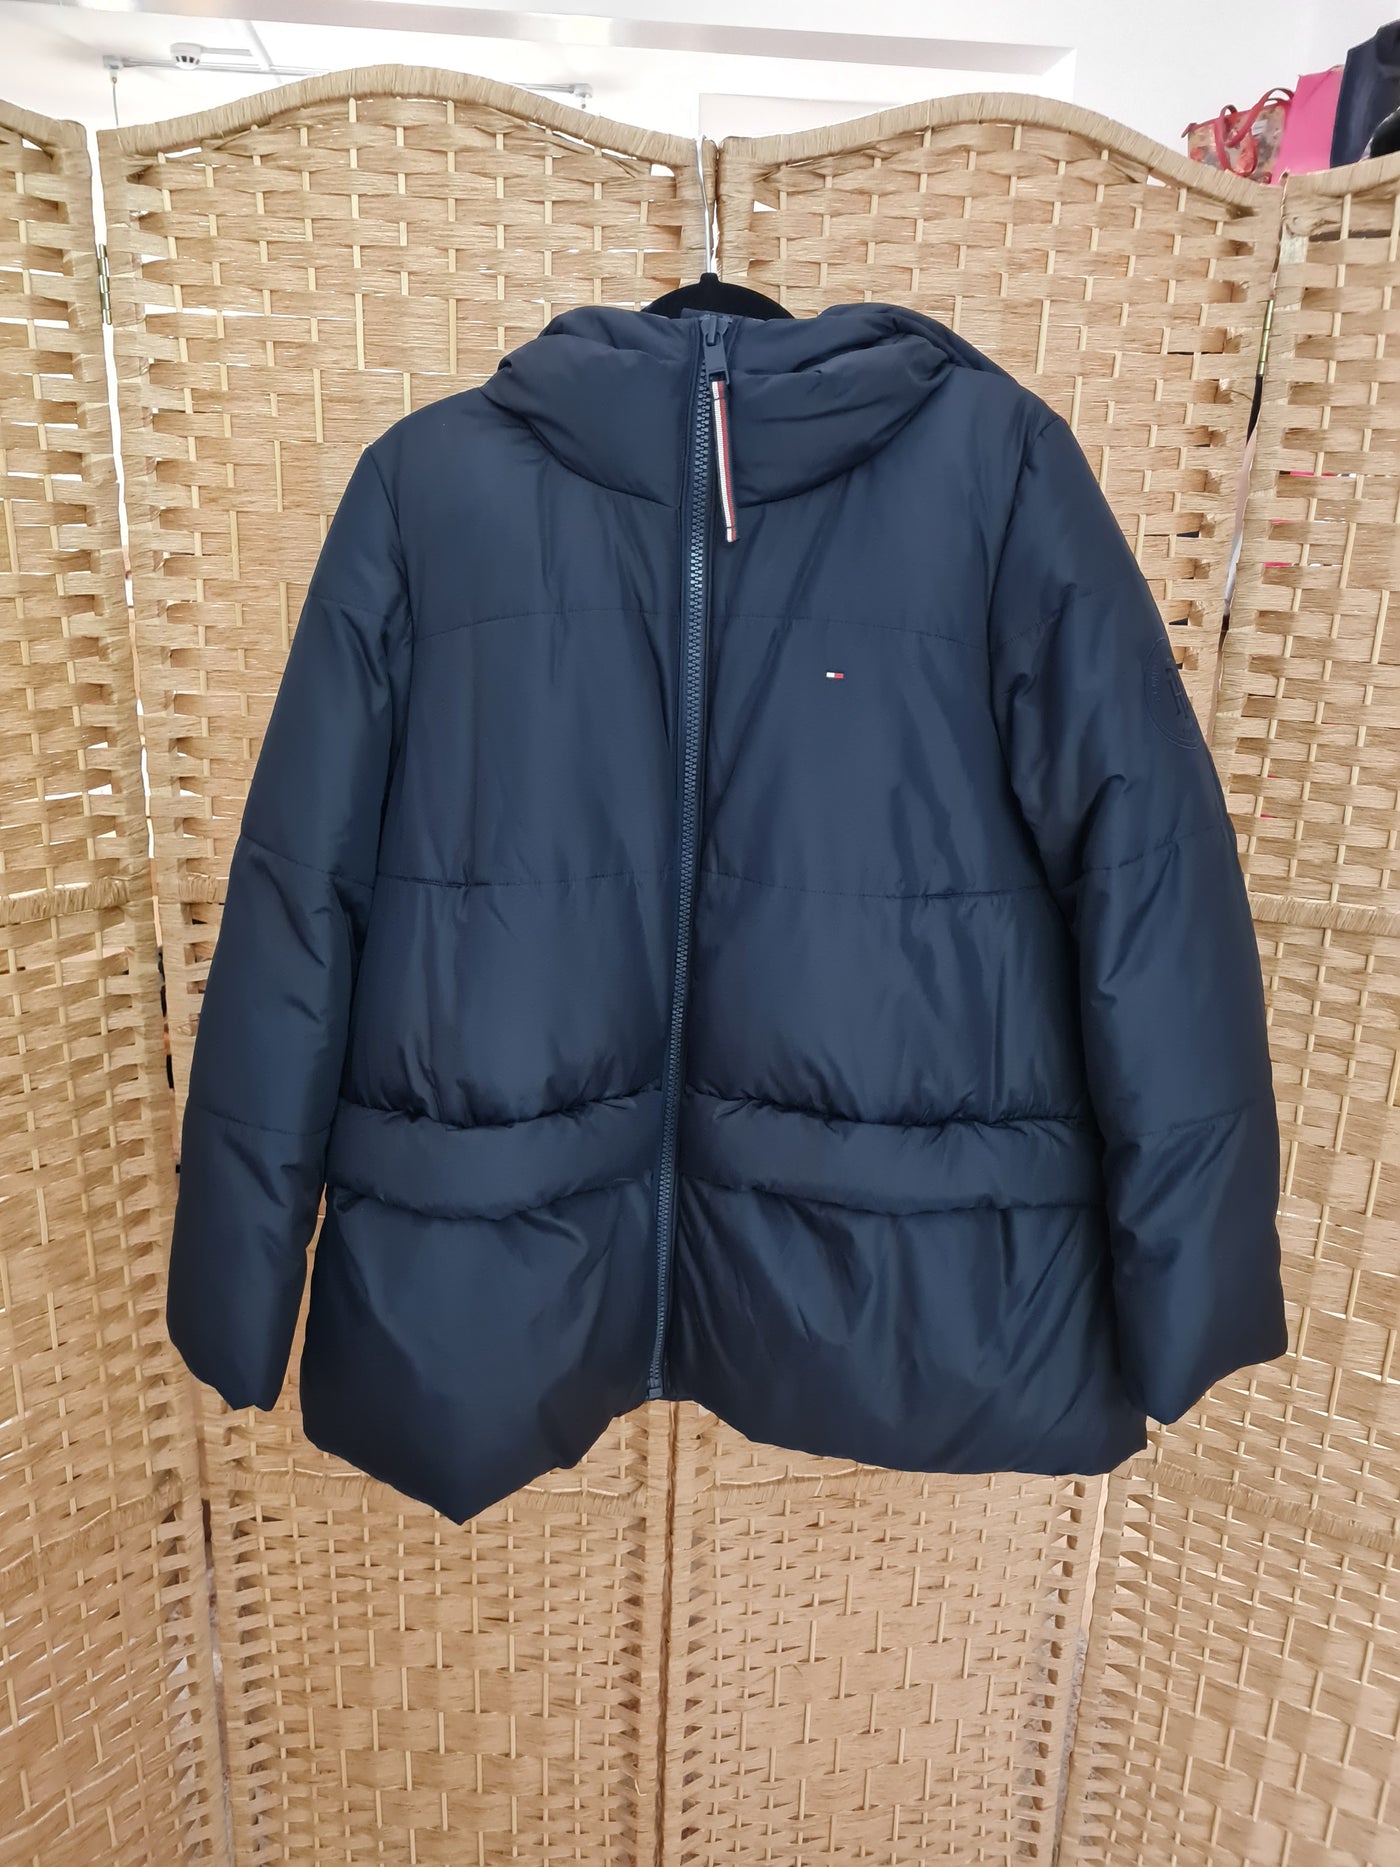 Tommy Hilfiger Navy Puffa Jacket XL